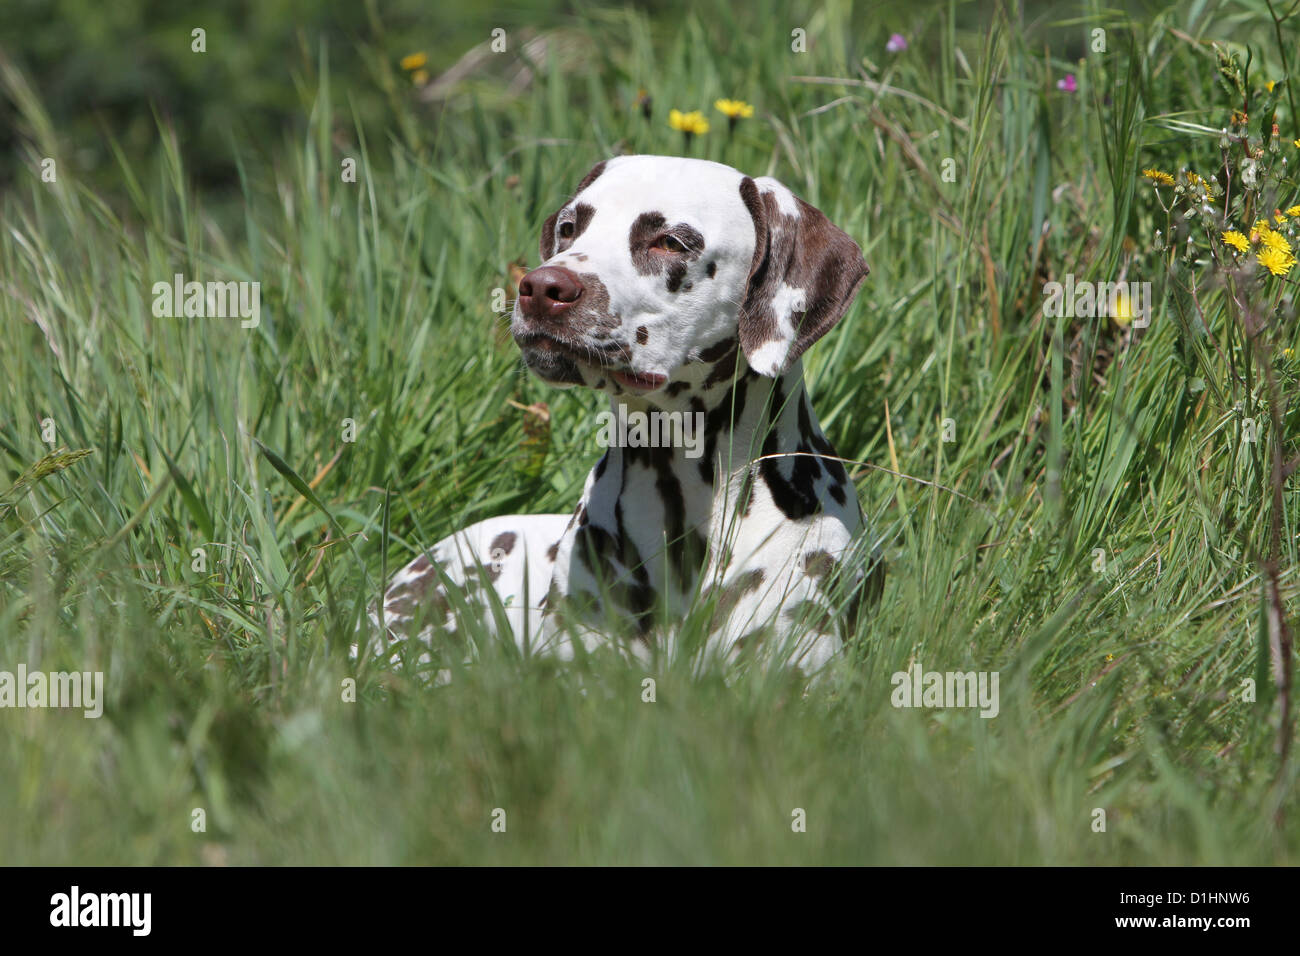 Dog Dalmatian / Dalmatiner / Dalmatien puppy lying on the grass Stock Photo